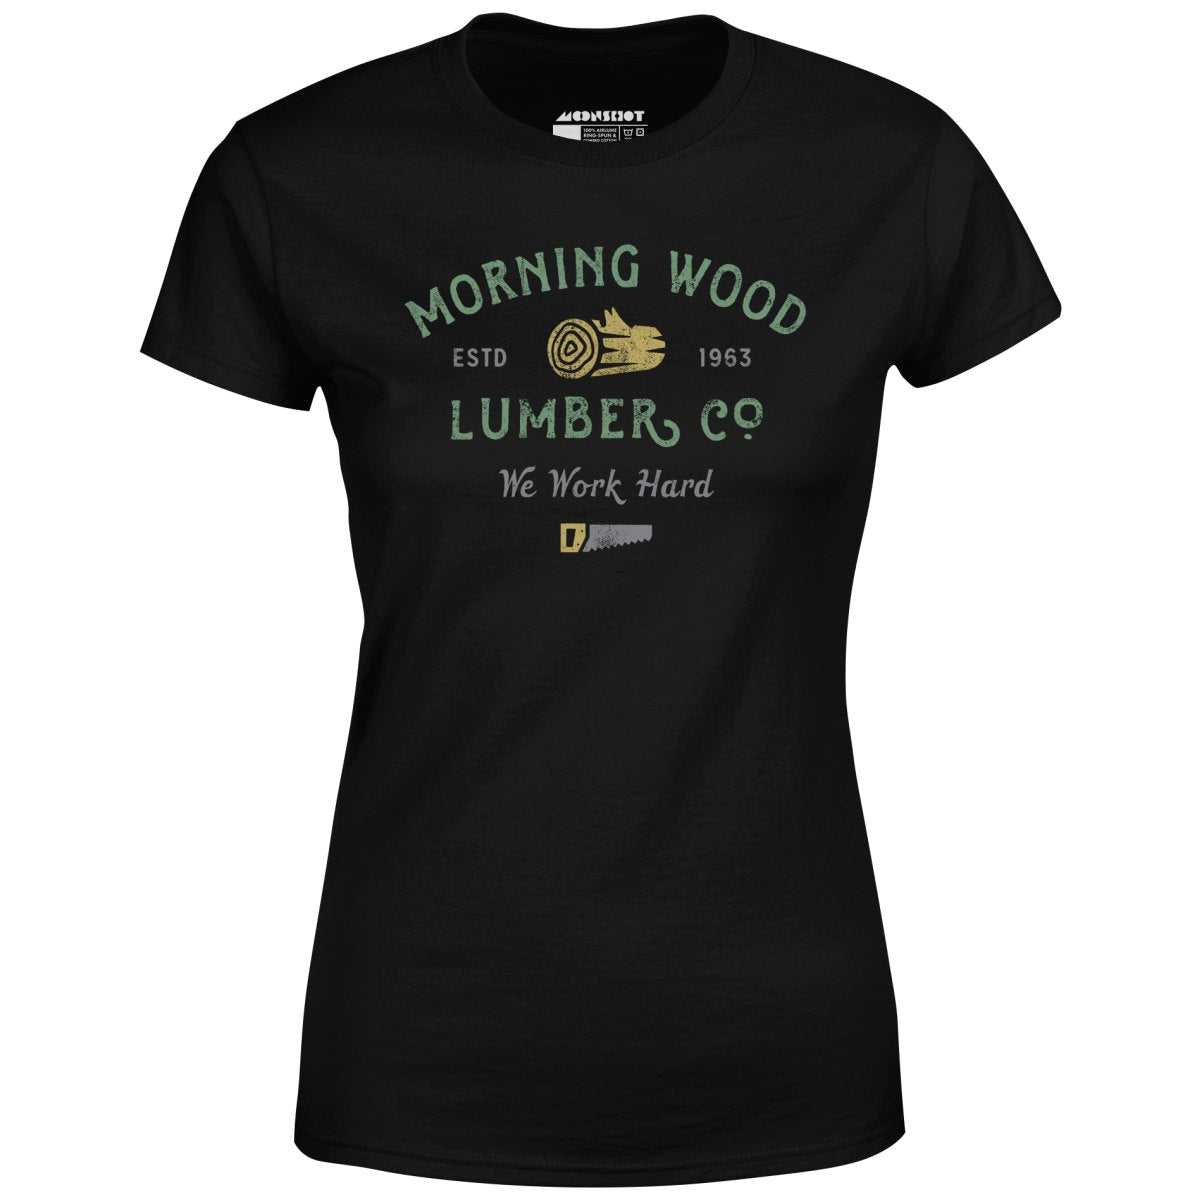 Morning Wood Lumber Company - Women's T-Shirt